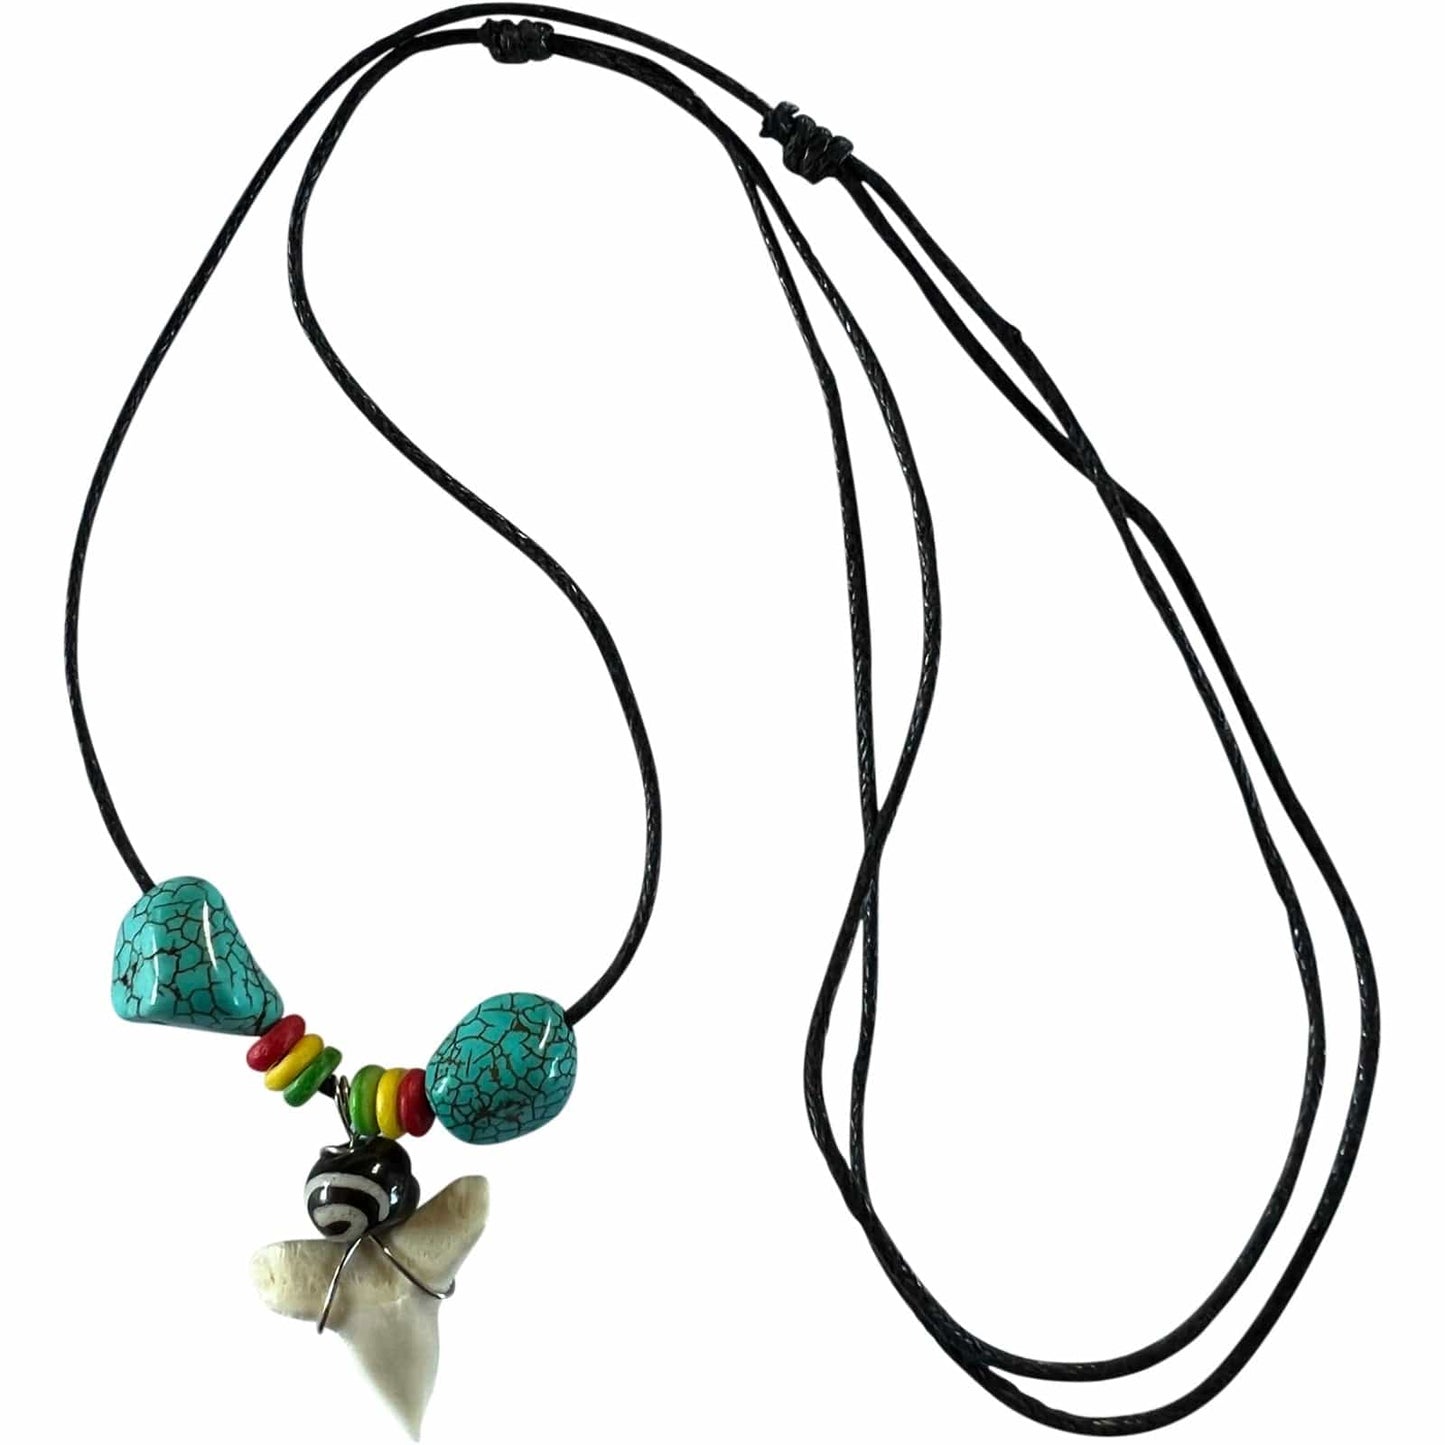 Imitation Resin Shark Tooth Pendant Necklace Cord Chain Rasta Reggae Turquoise Beads Jewellery